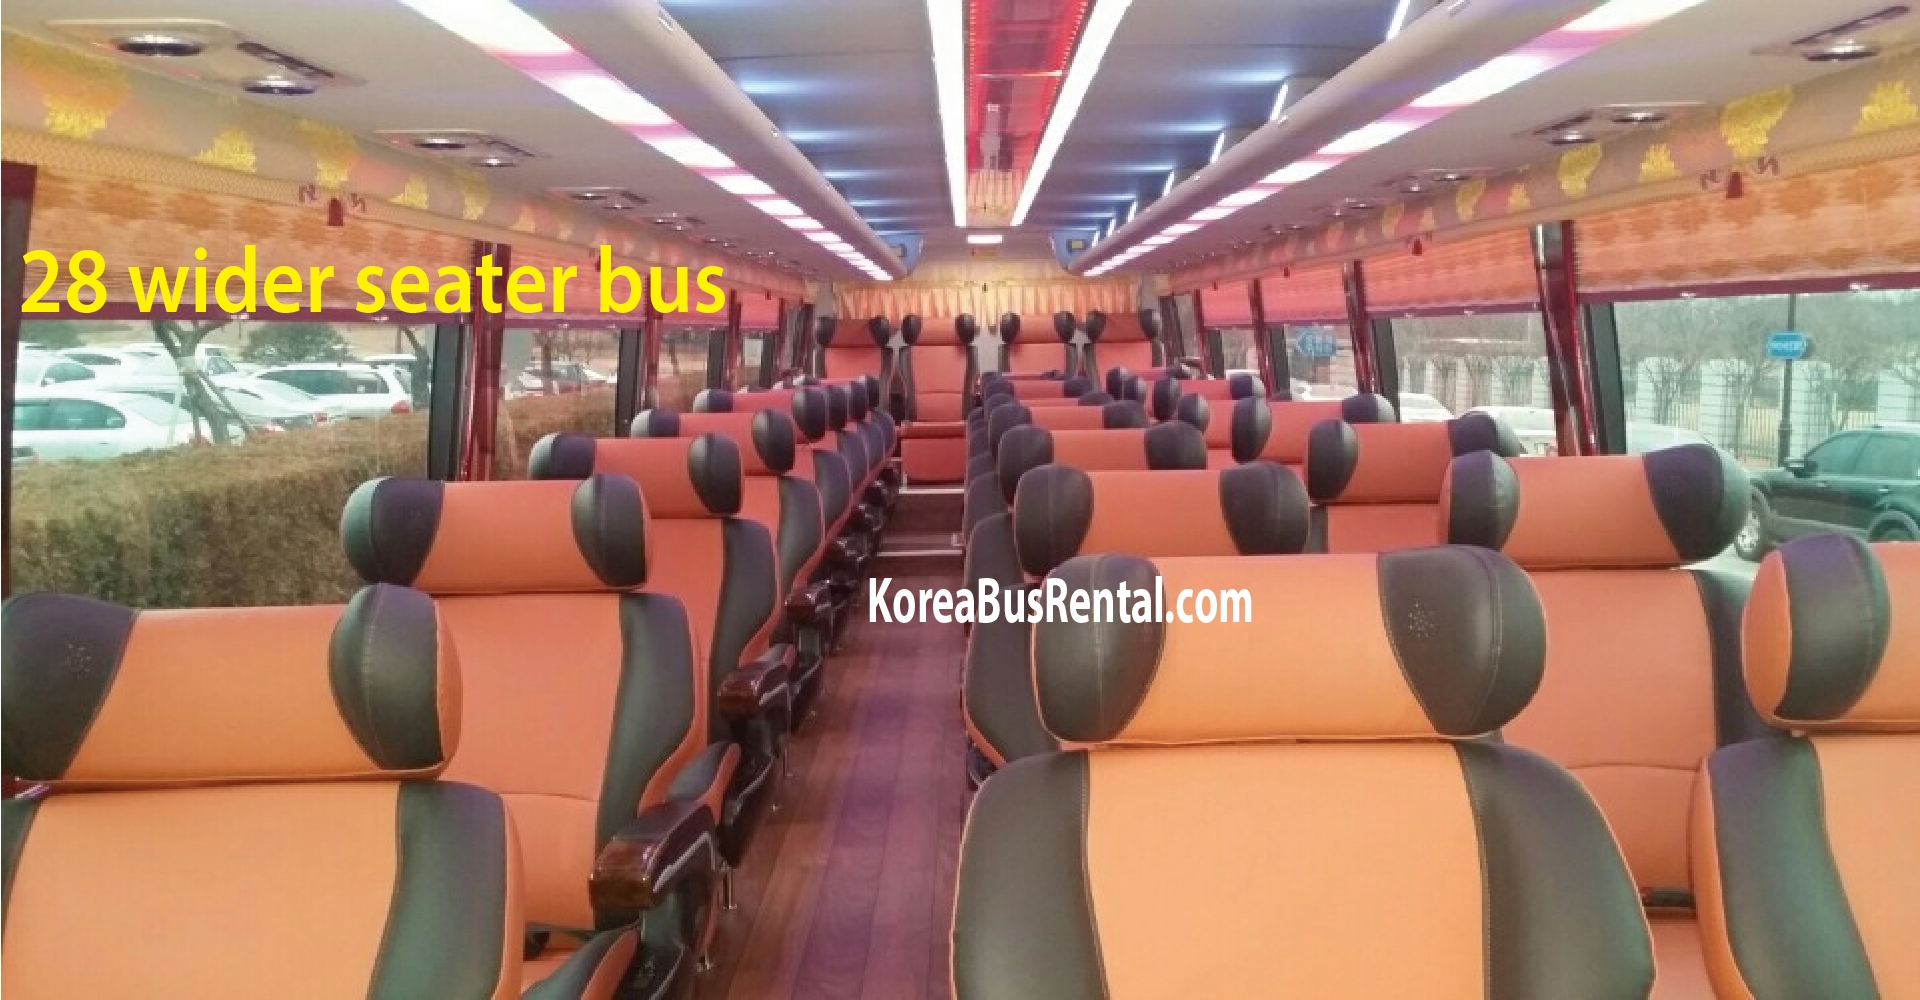 Korea bus rental, Seoul bus rental with driver